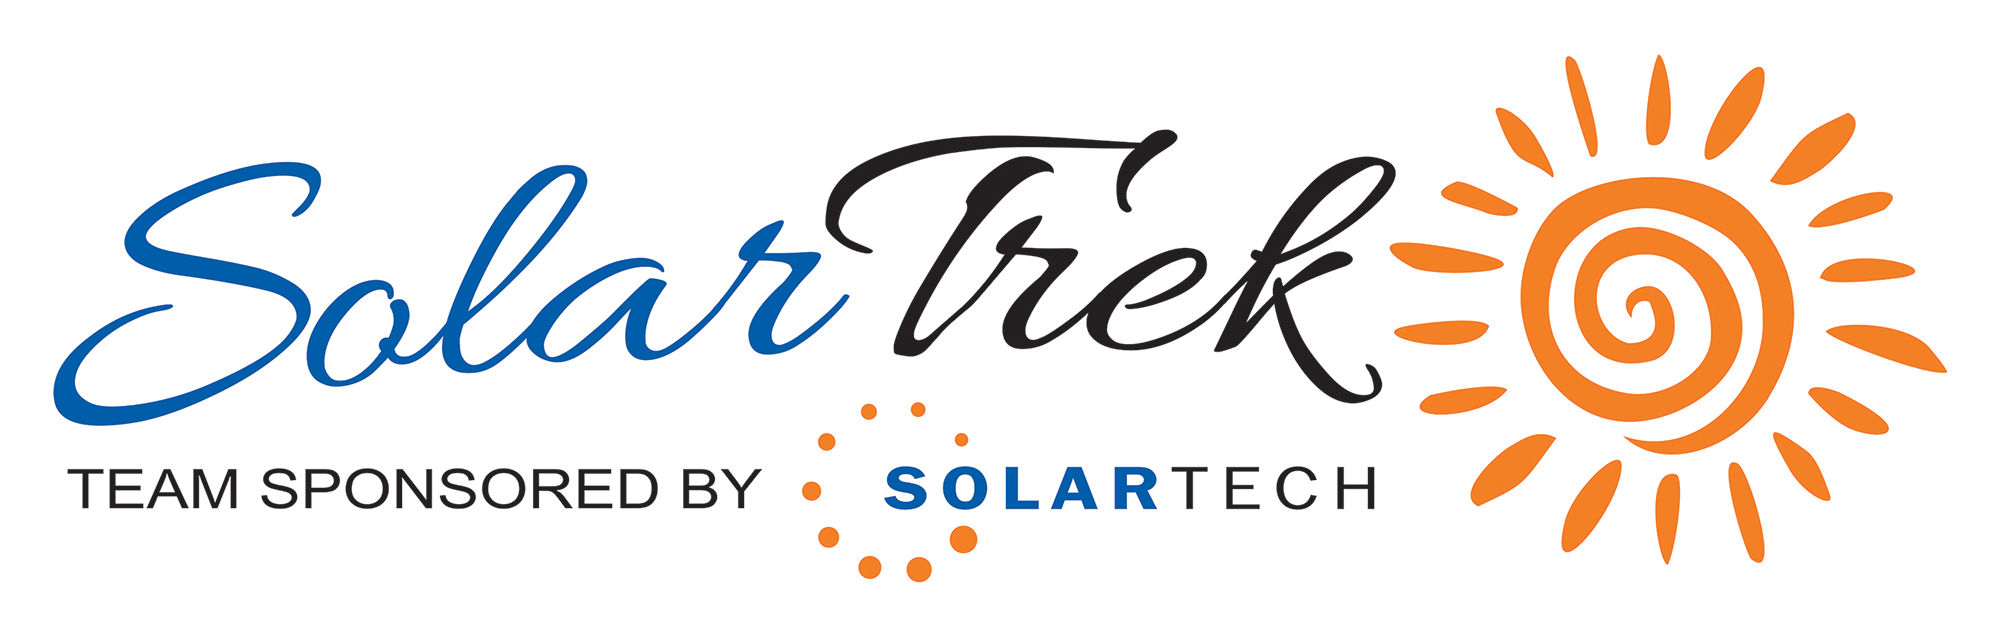 Team SolarTrek for Make-A-Wish San Diego